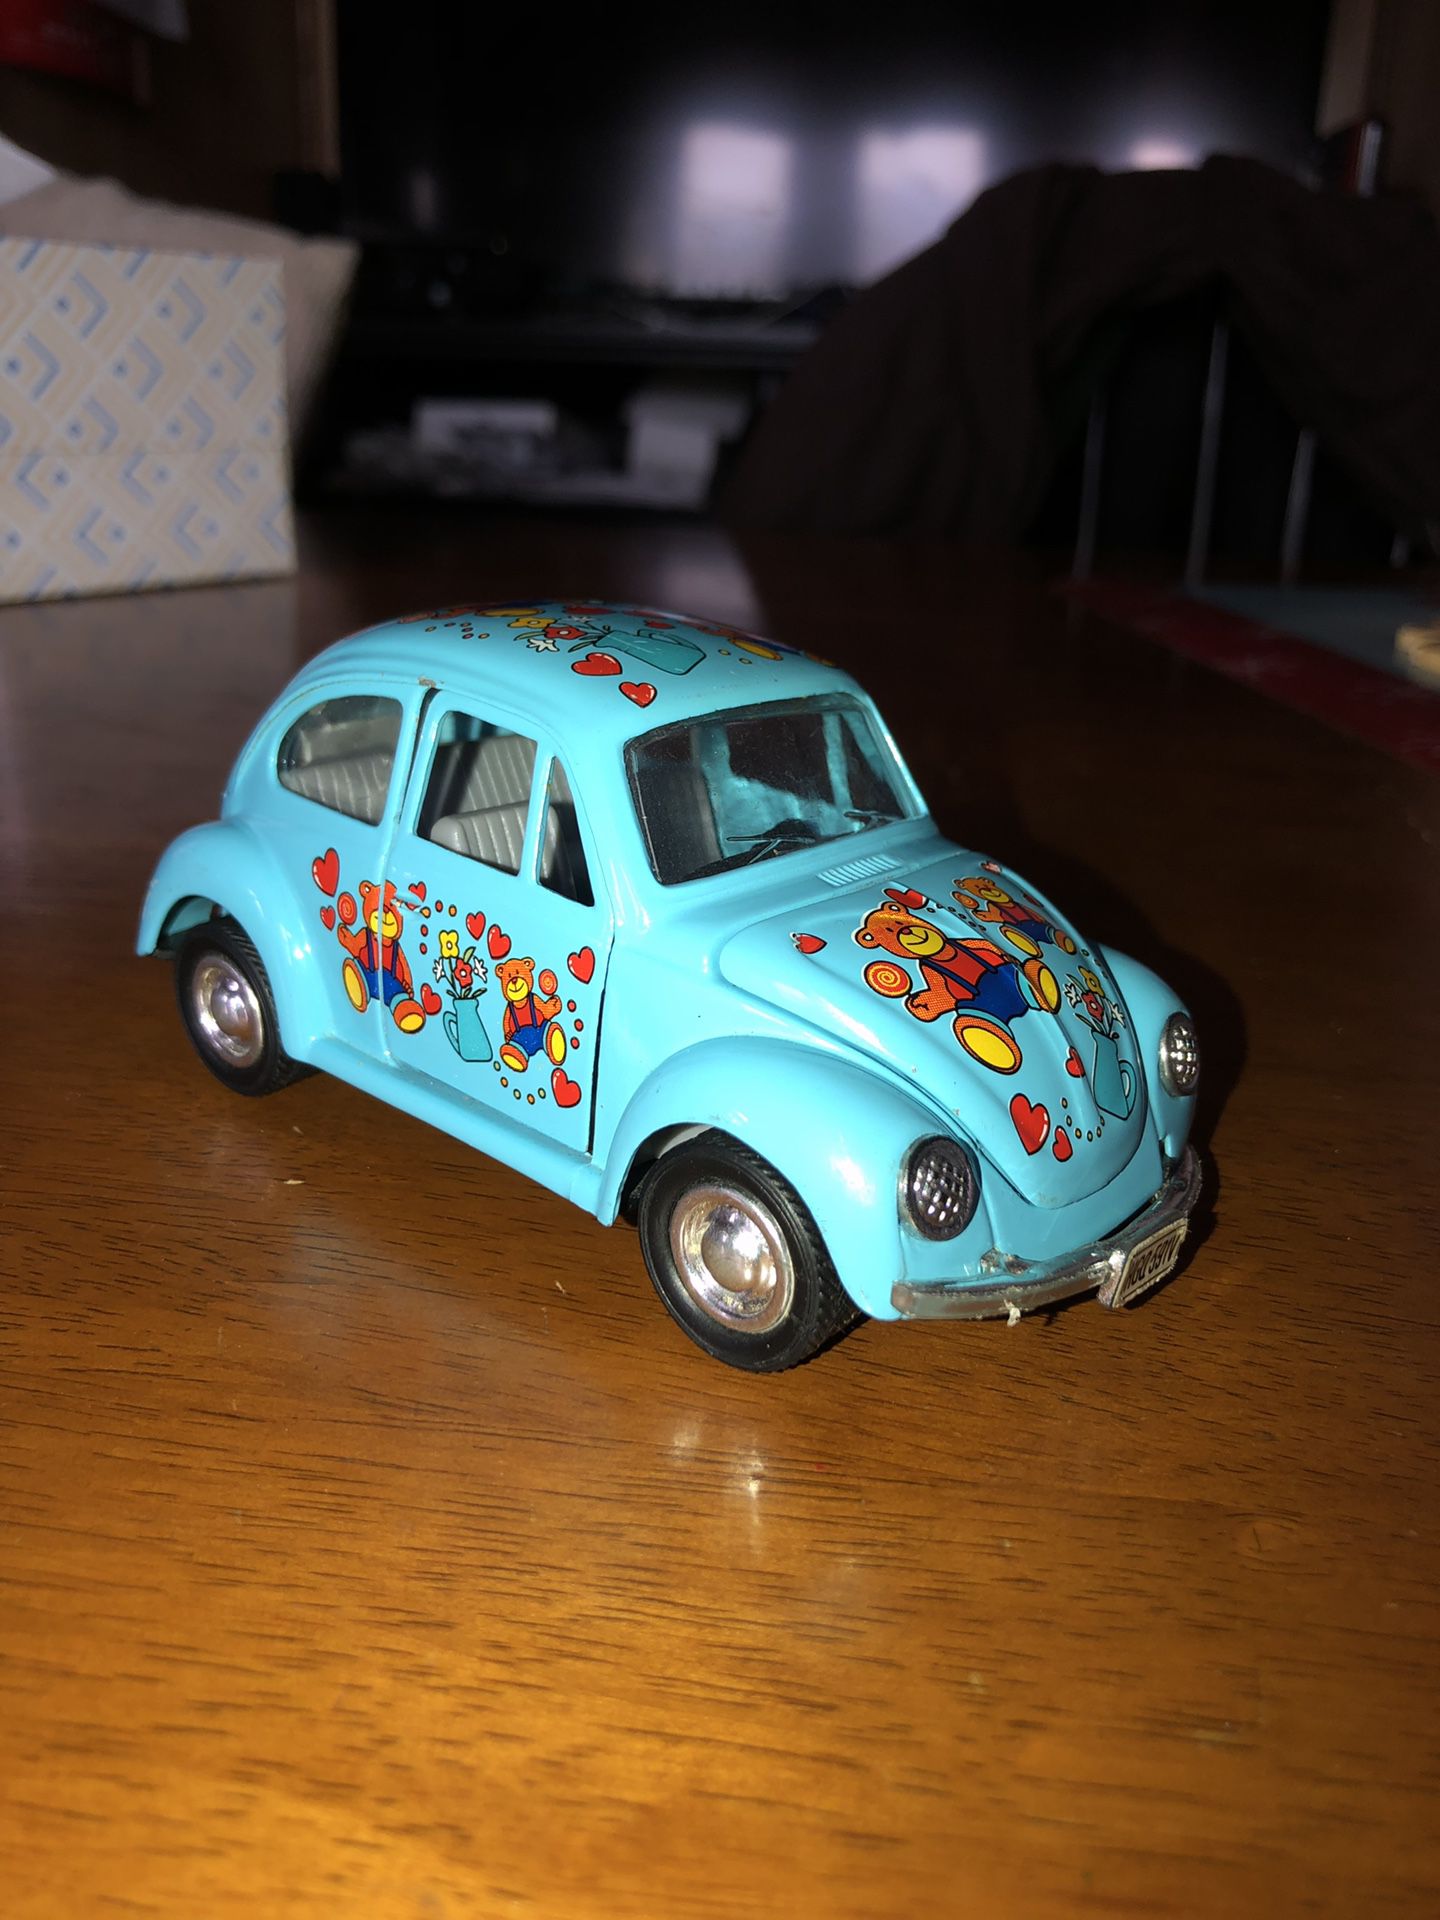 Vintage Volkswagen Beetle 1960s Classic Car Model Toy Teddy Bear